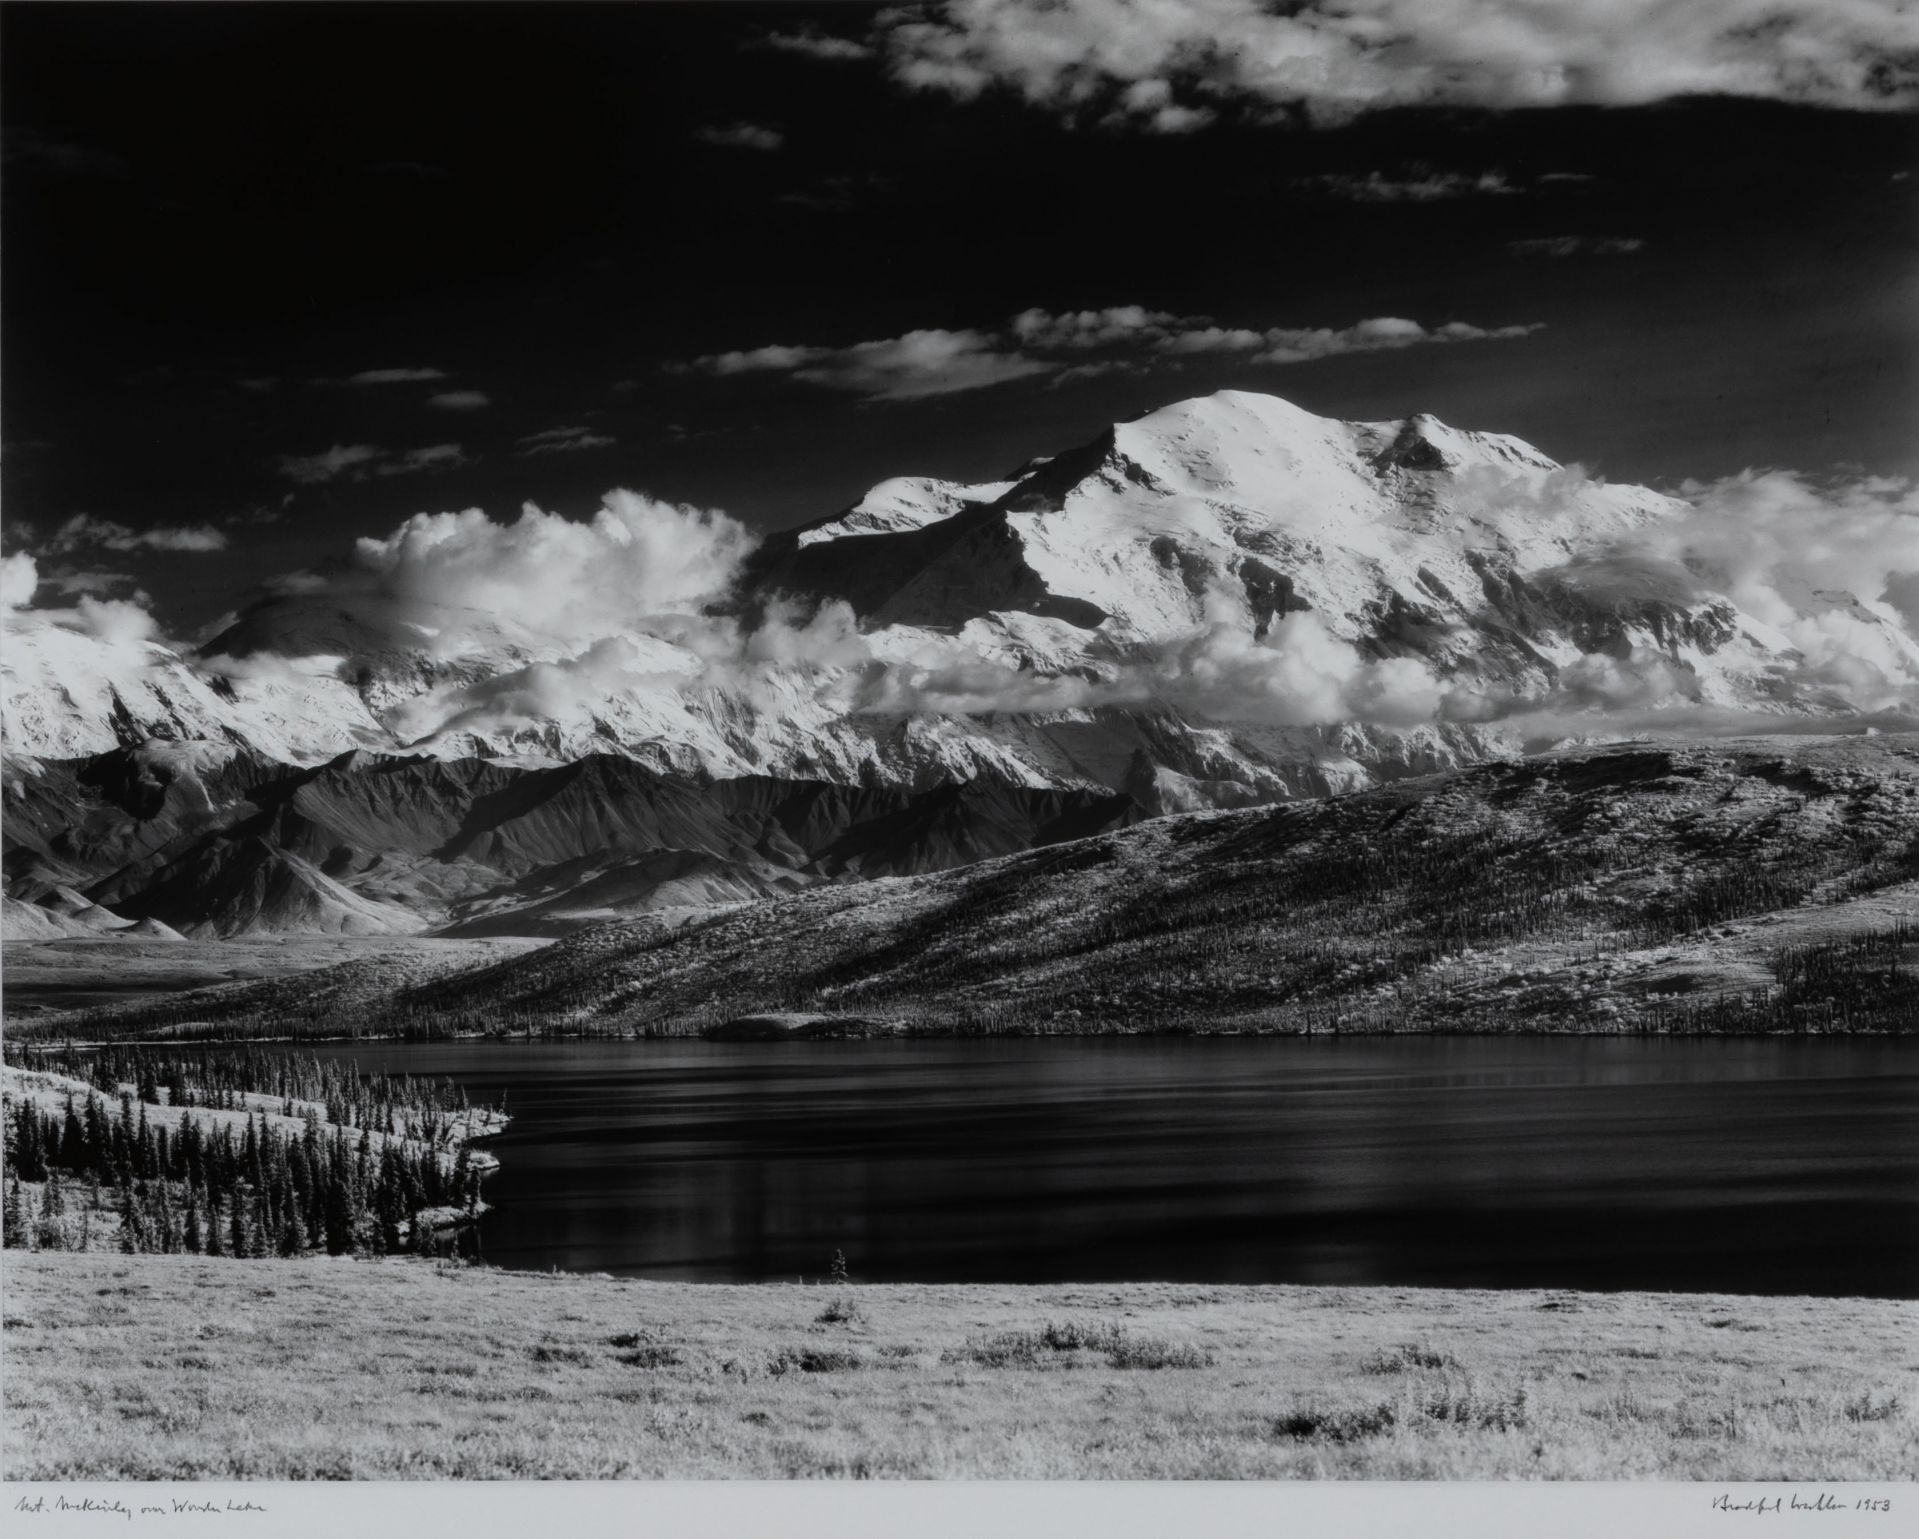 Bradford Washburn, Mount McKinley over Wonder Lake, 1953, silver gelatin print, 2020.1.49